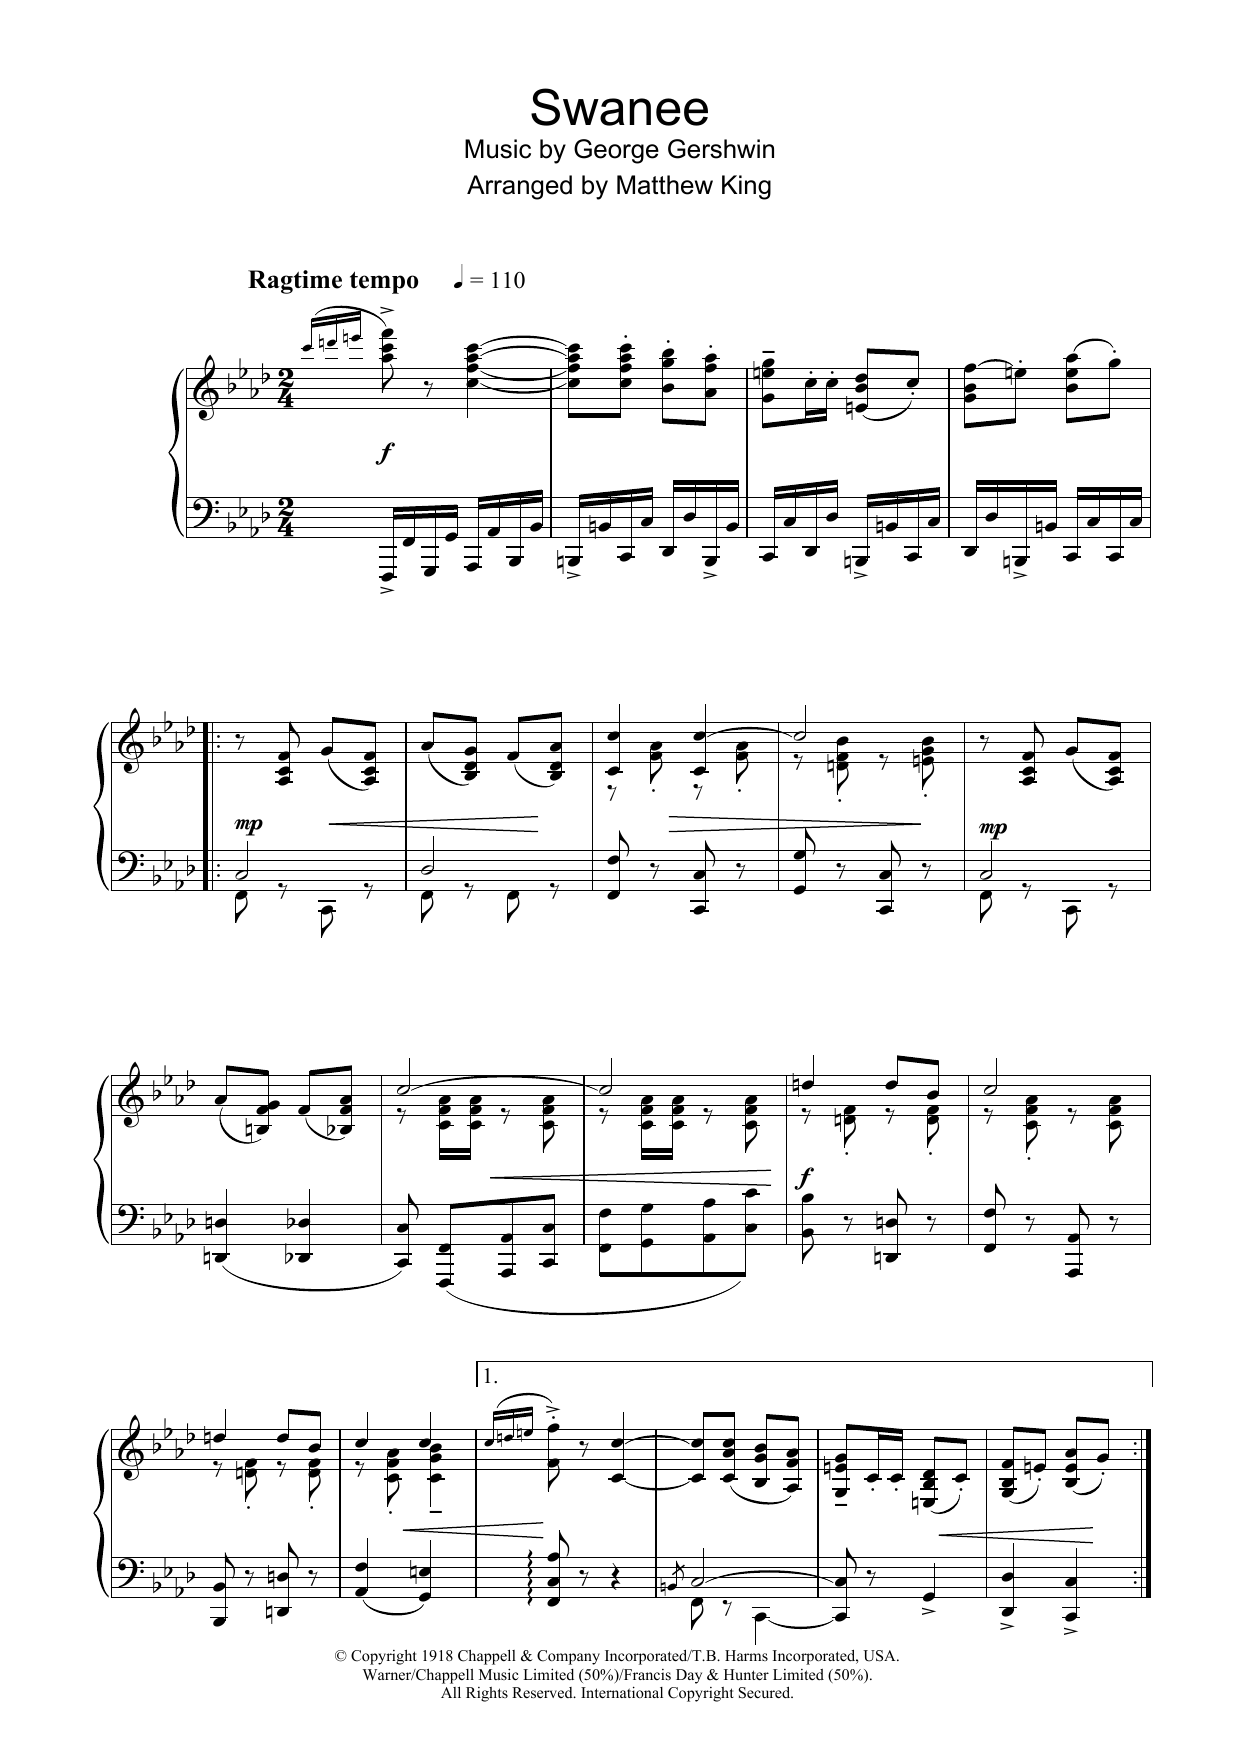 Download George Gershwin Swanee Sheet Music